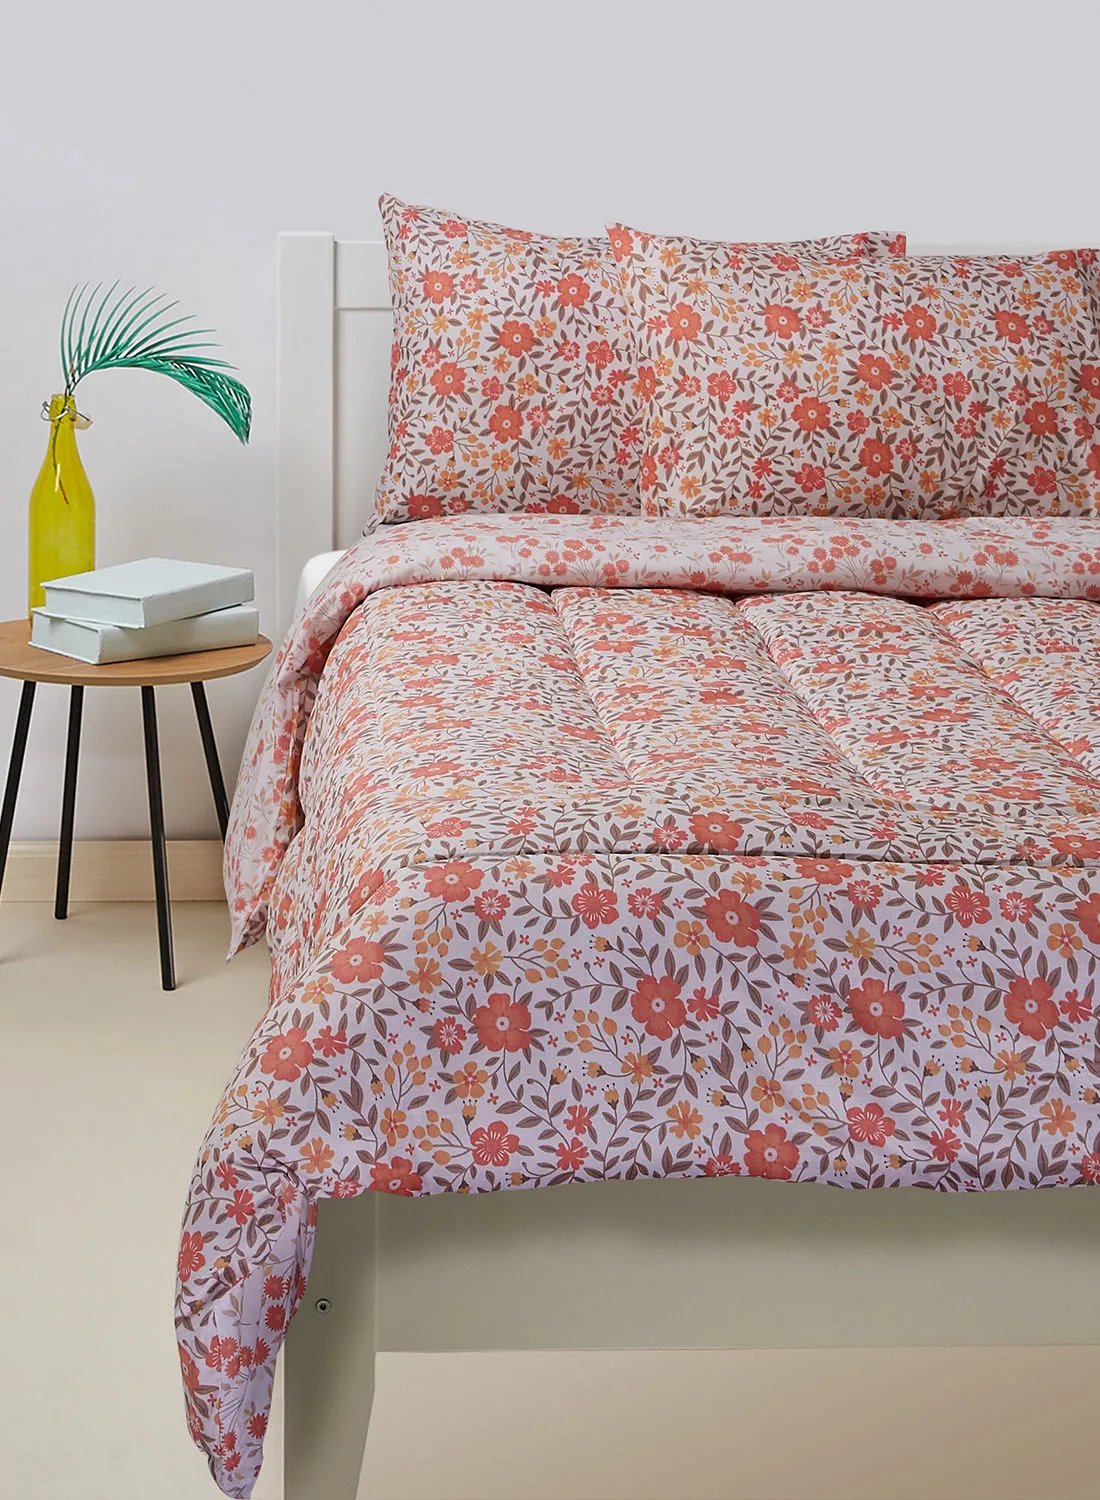 Amal Comforter Set King Size All Season Everyday Use Bedding Set 100% Cotton 3 Pieces 1 Comforter 2 Pillow Covers  Orange